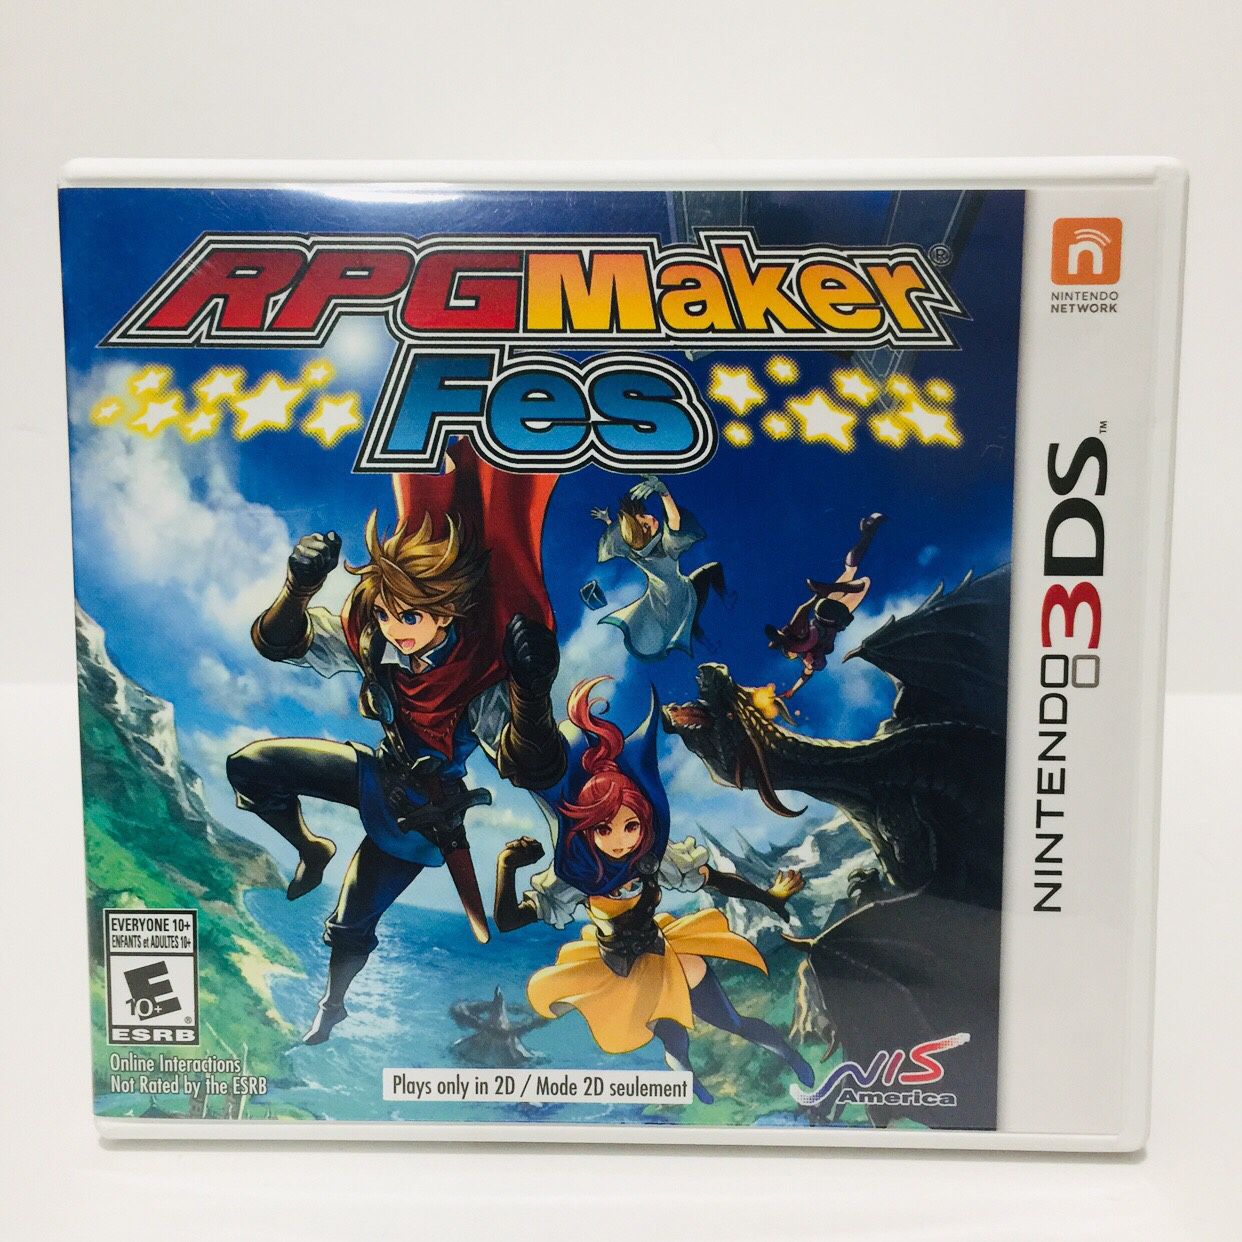 RPG Maker FES Nintendo 3DS/2DS